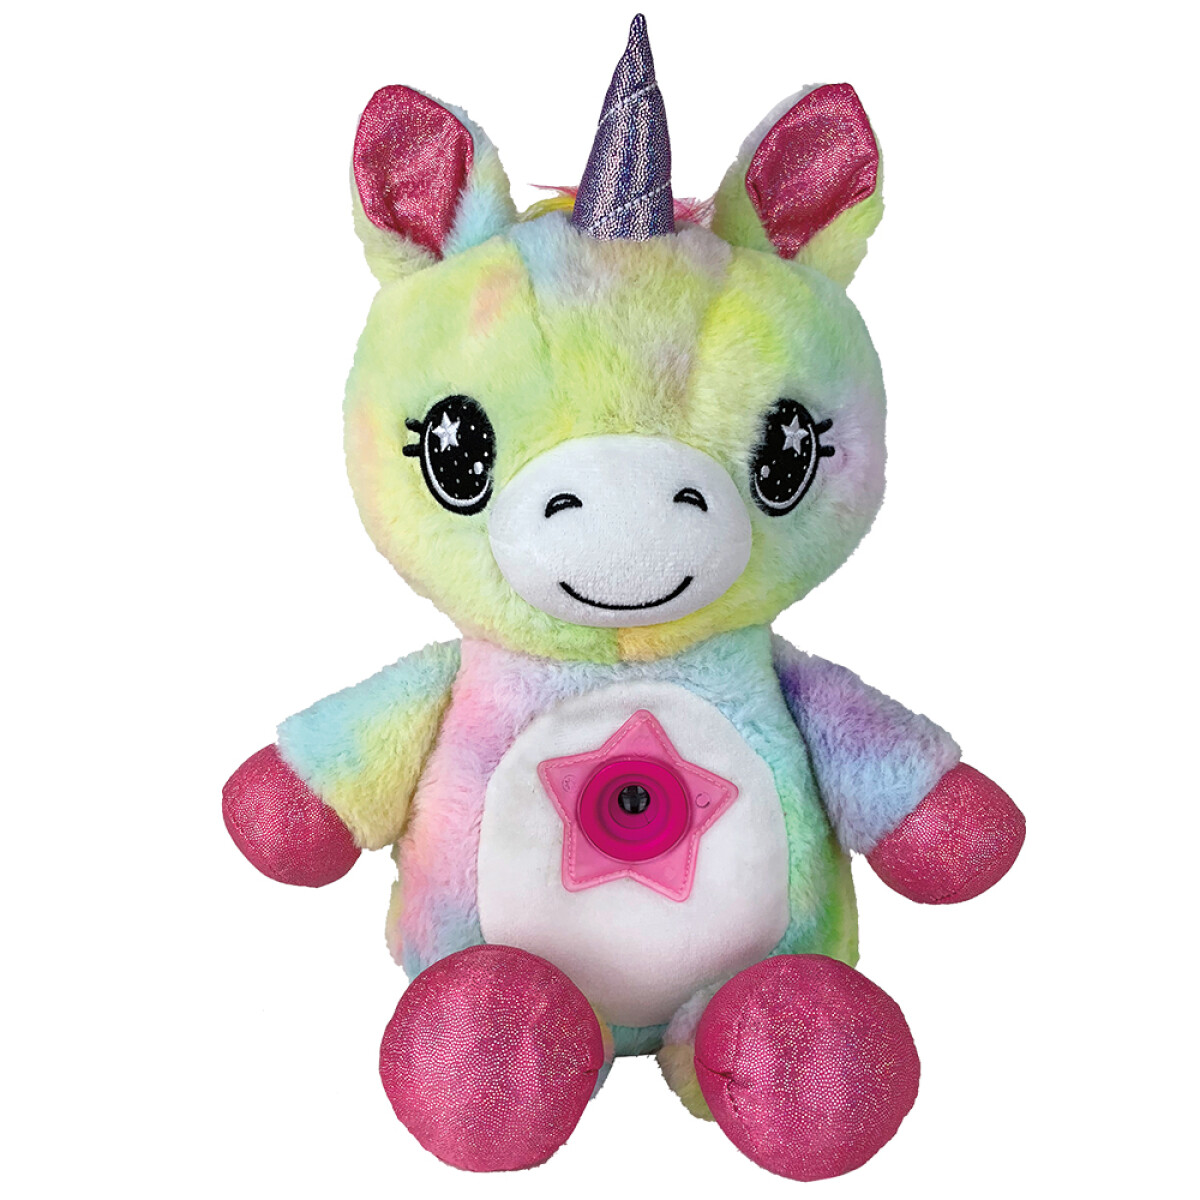 Peluche luminoso - Star Belly - Unicornio arcoiris 